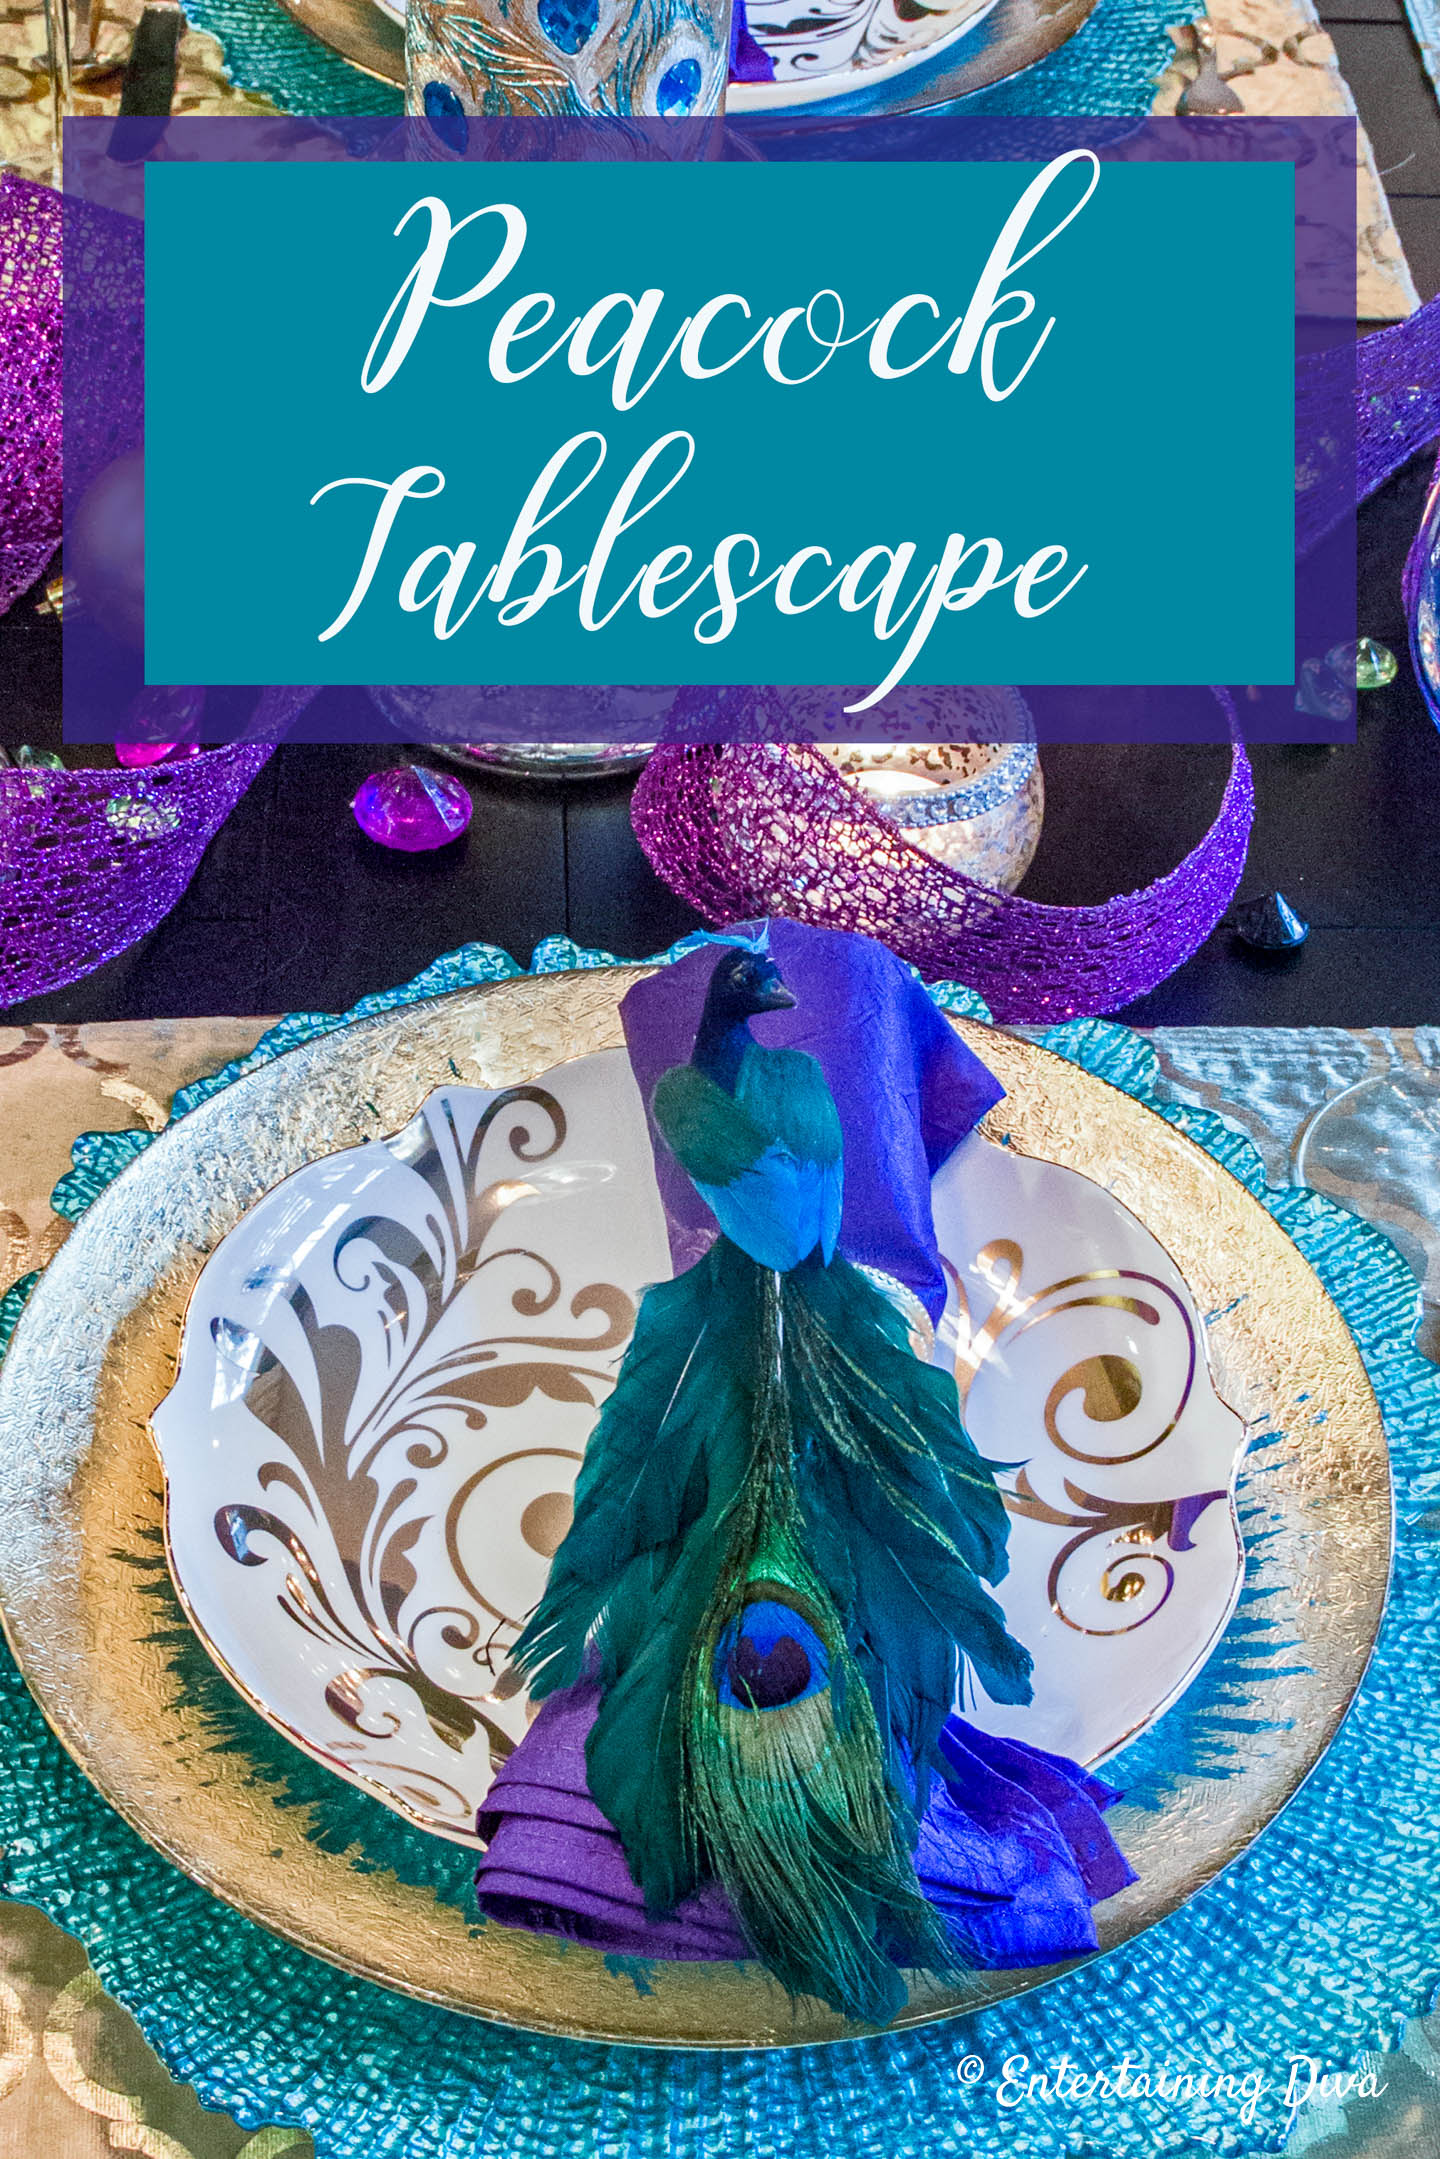 Peacock tablescape